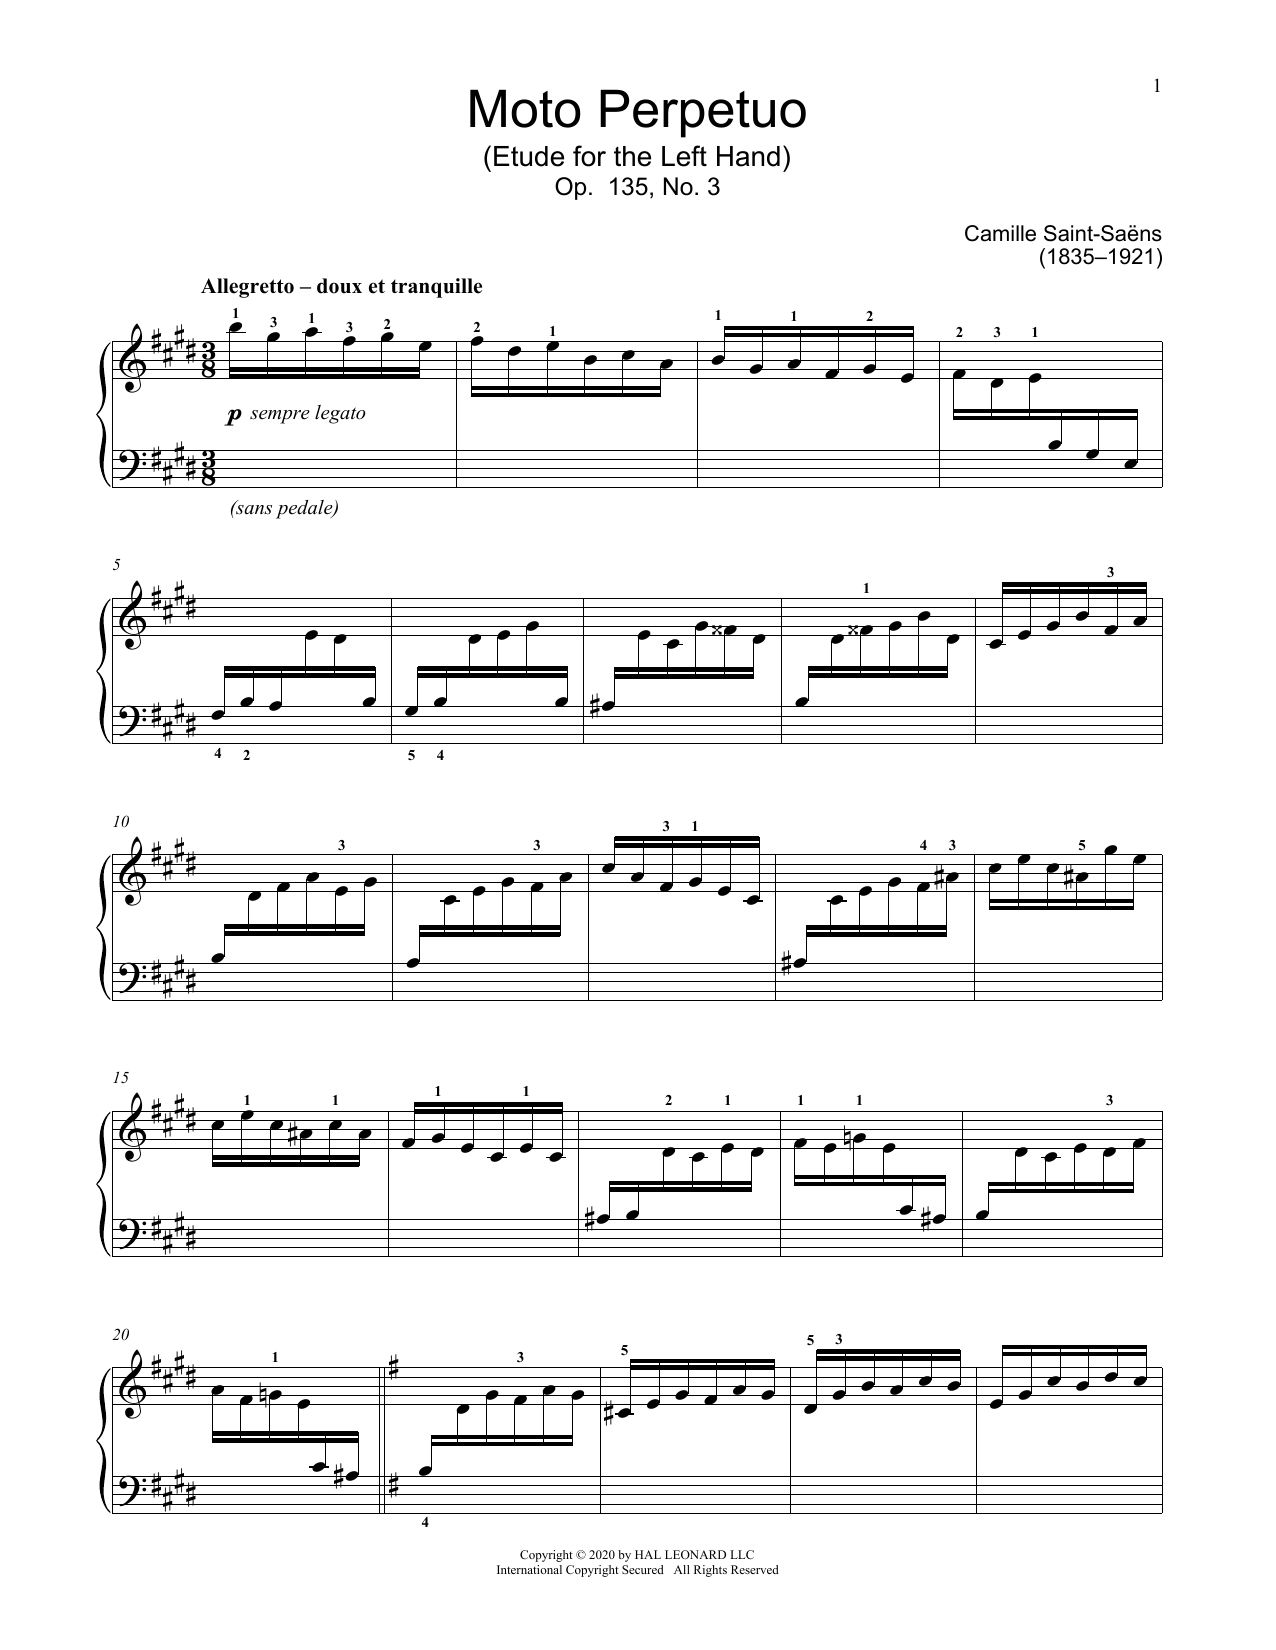 Download Camille Saint-Saens Moto Perpetuo, Op. 135, No. 3 Sheet Music